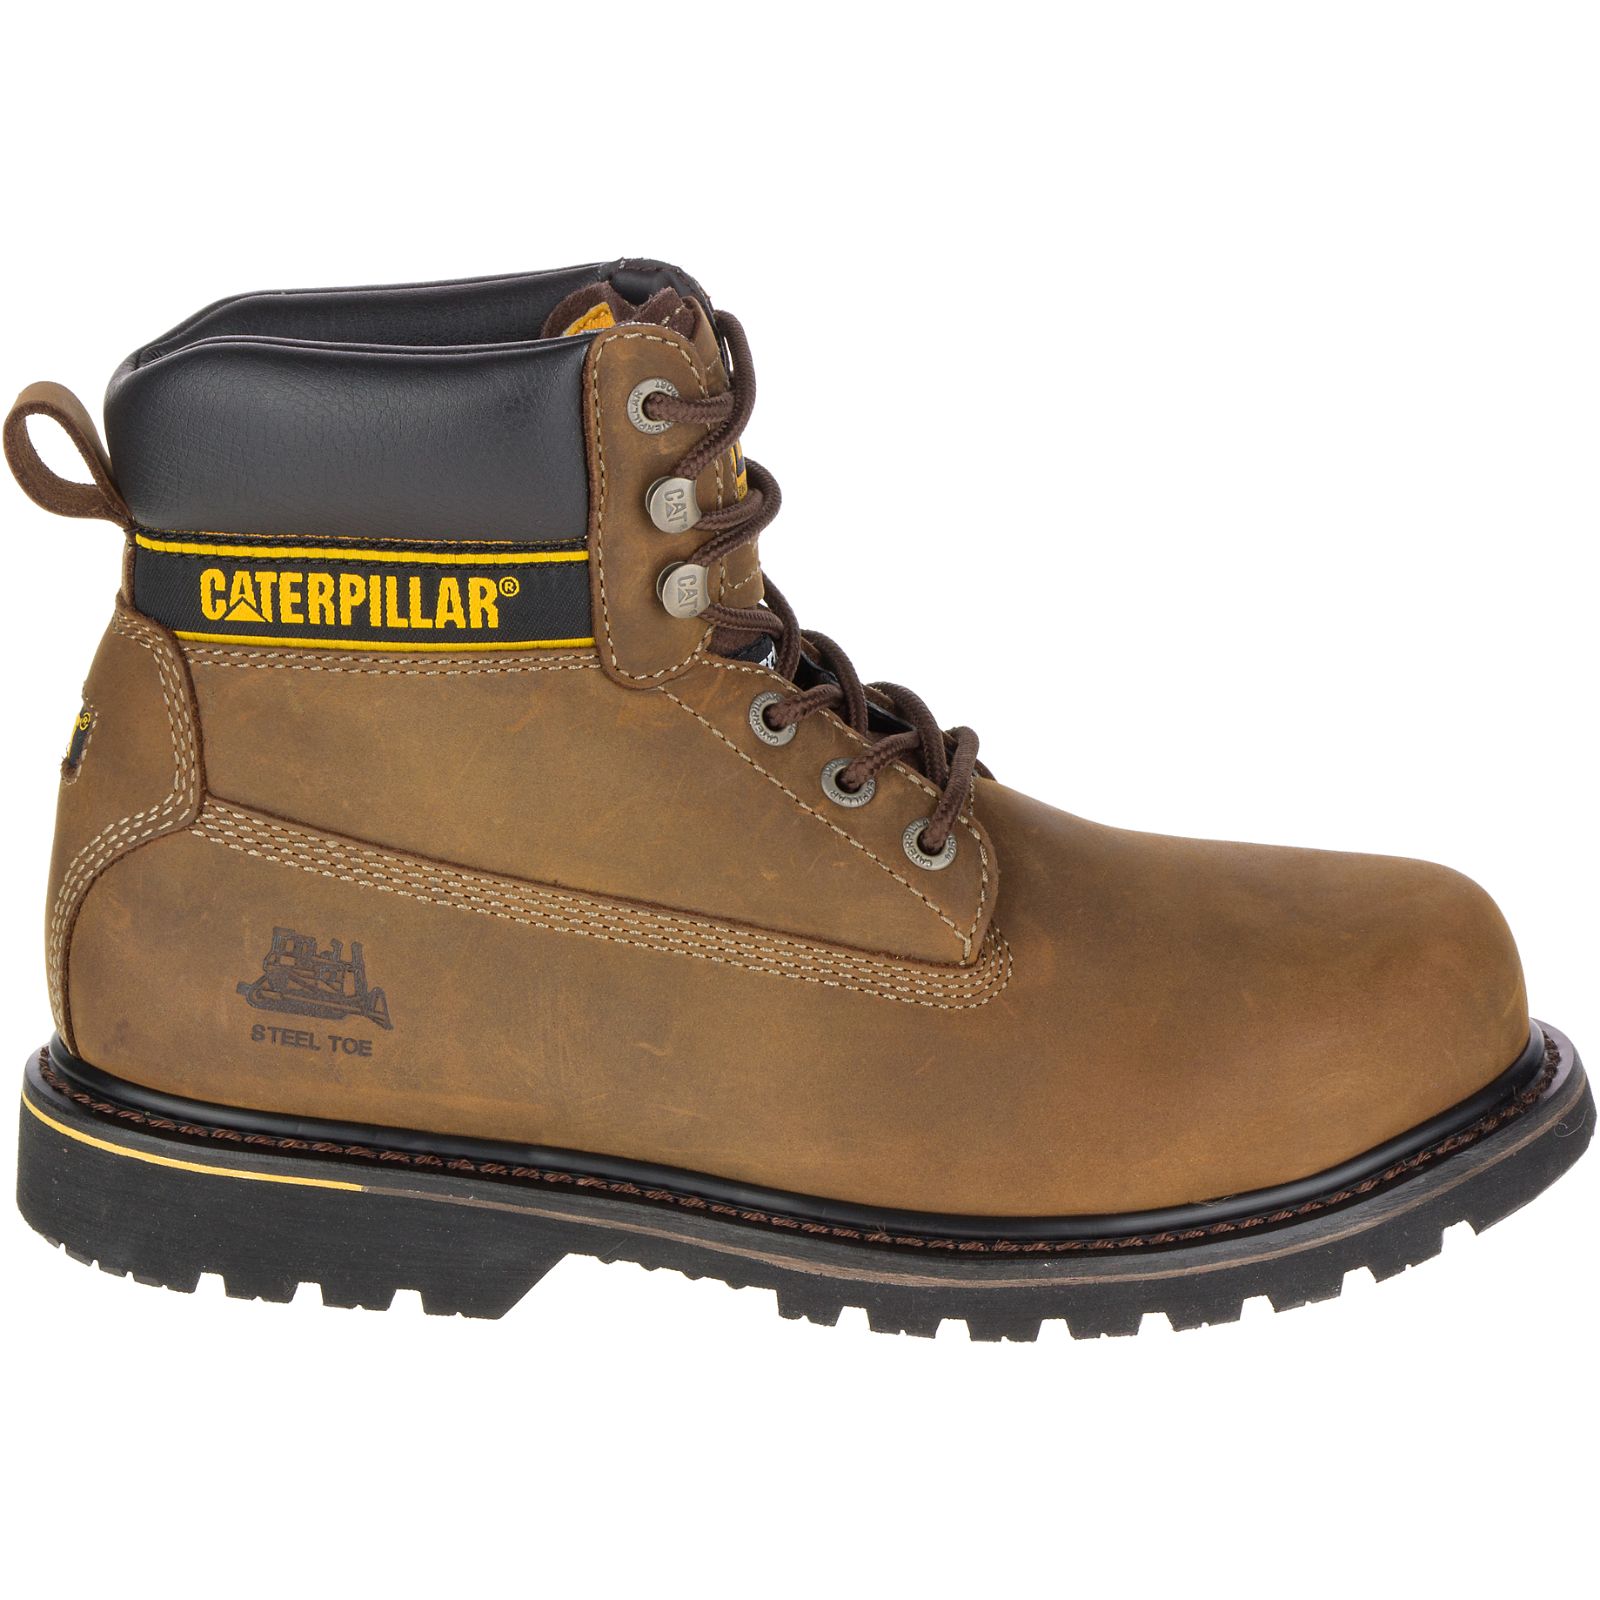 Caterpillar Work Boots Sharjah - Caterpillar Holton Steel Toe S3 Hro Src Mens - Dark Brown BVLZSU170